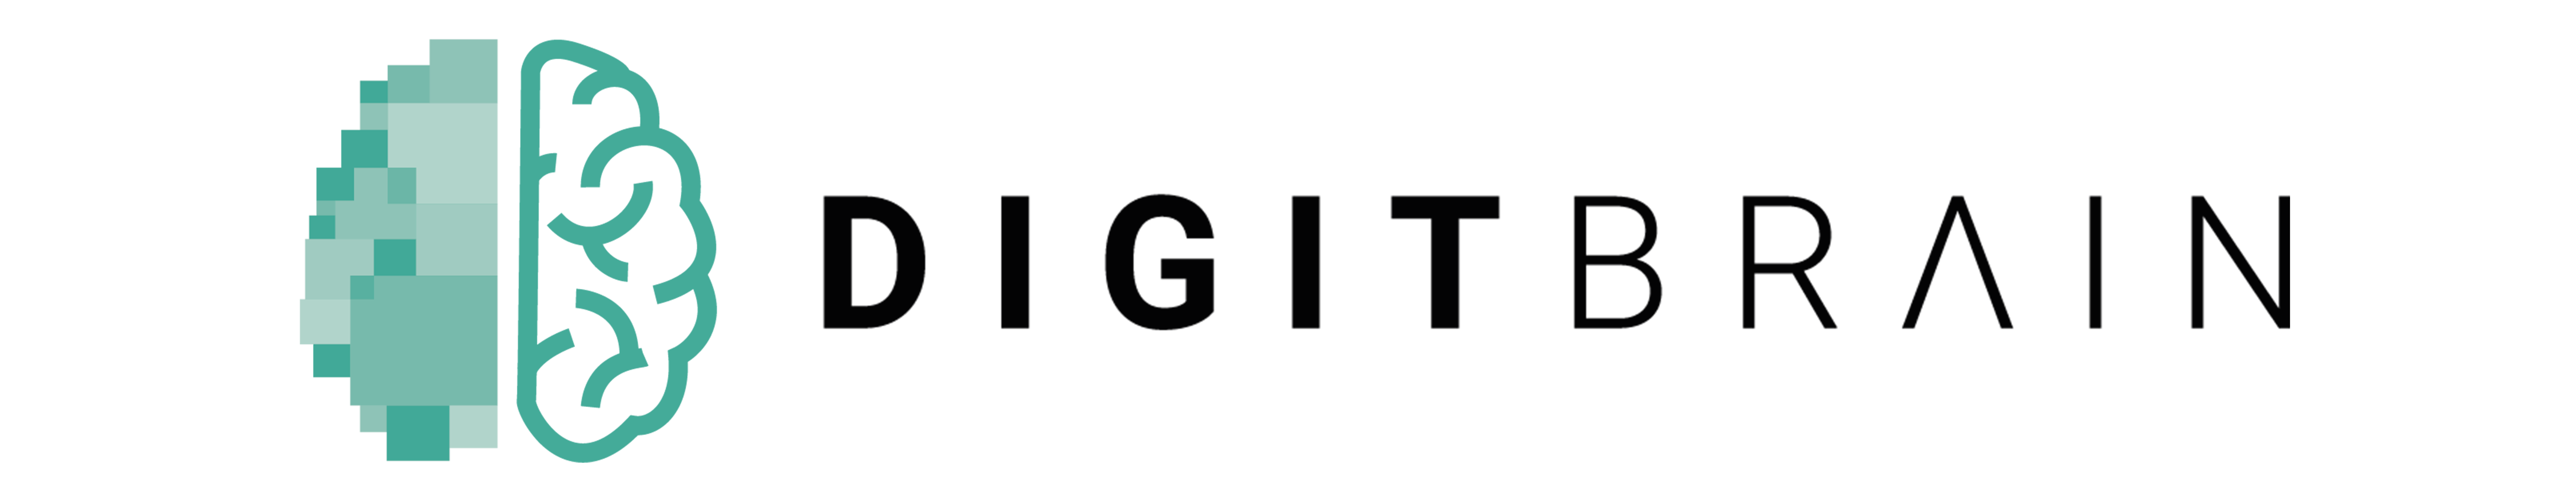 DIGITbrain logo